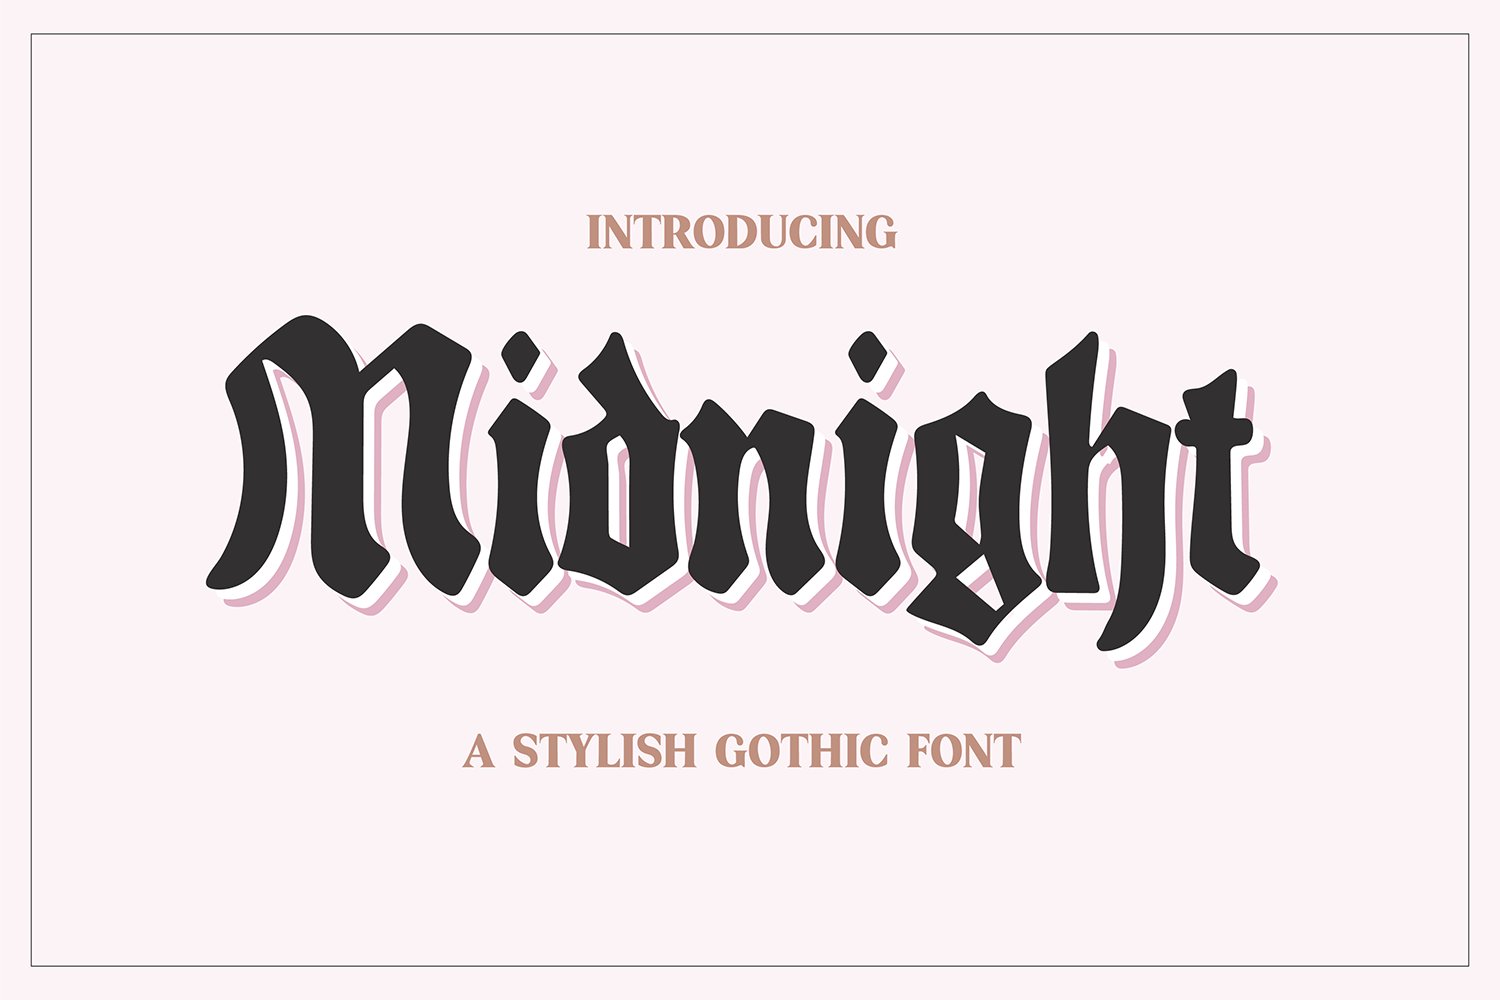 MIDNIGHT Stylish Gothic Font cover image.